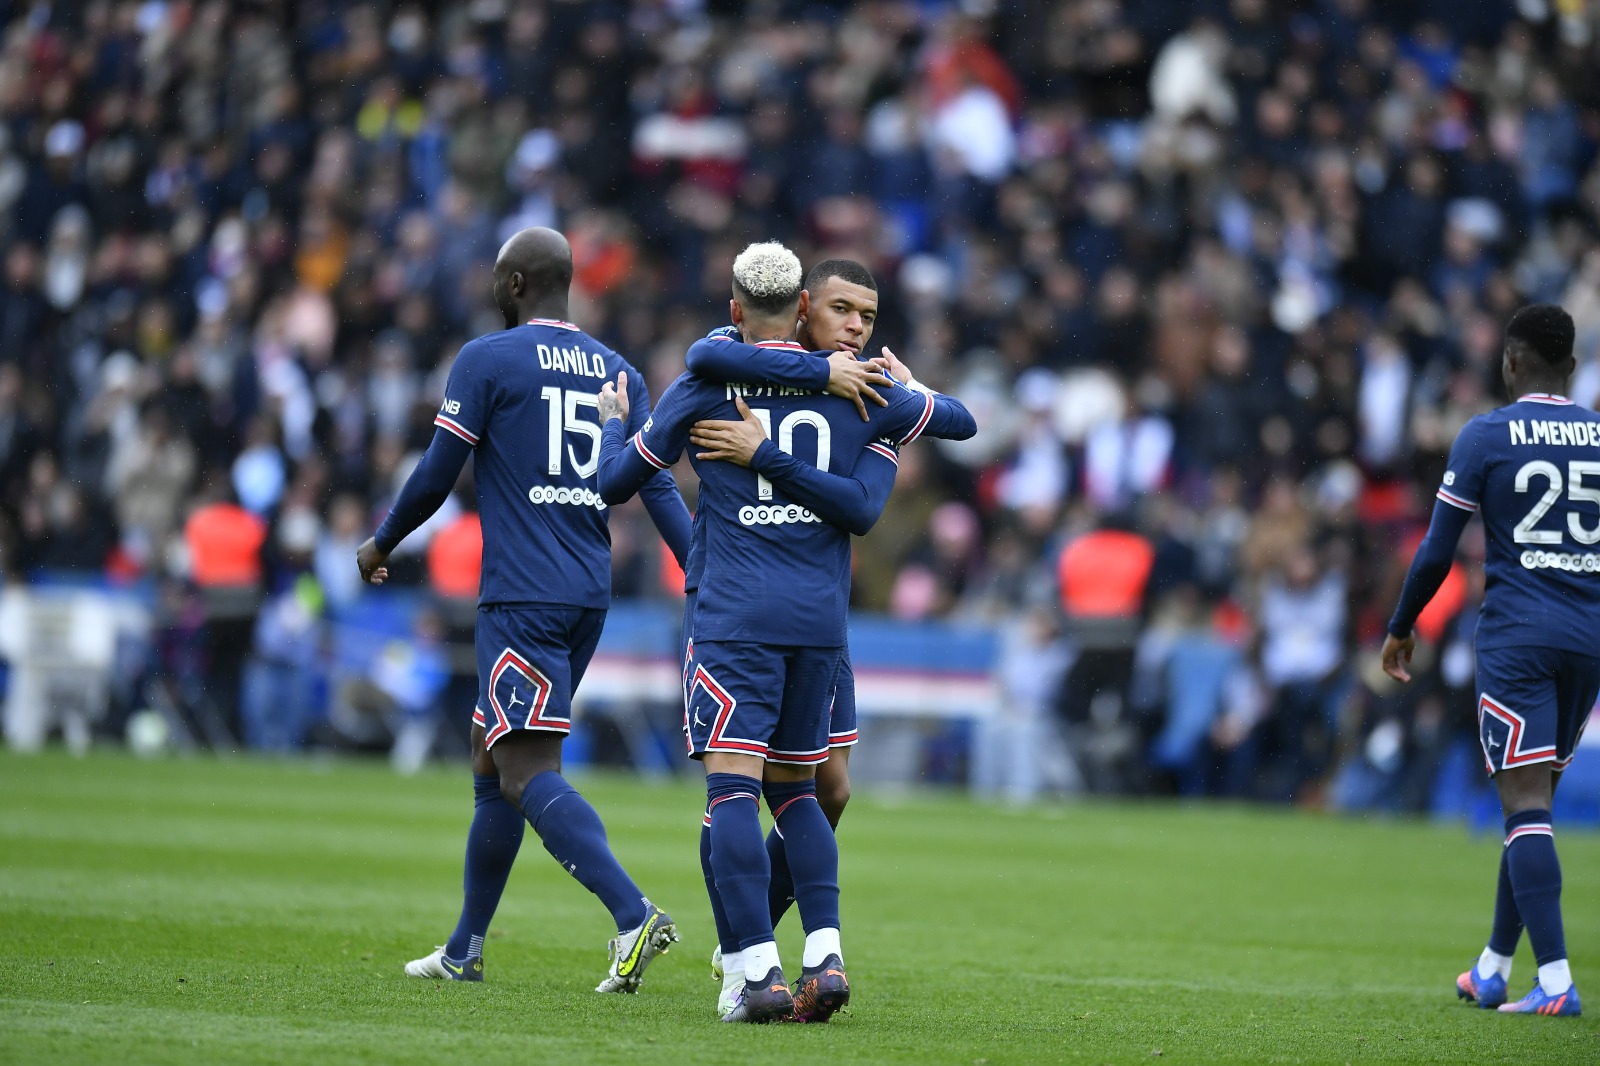 PSG 3-0 Bordeaux Highlights: Paris Saint Germain comfortably beat Bordeaux despite Lionel Messi and Neymar being booed by PSG fans